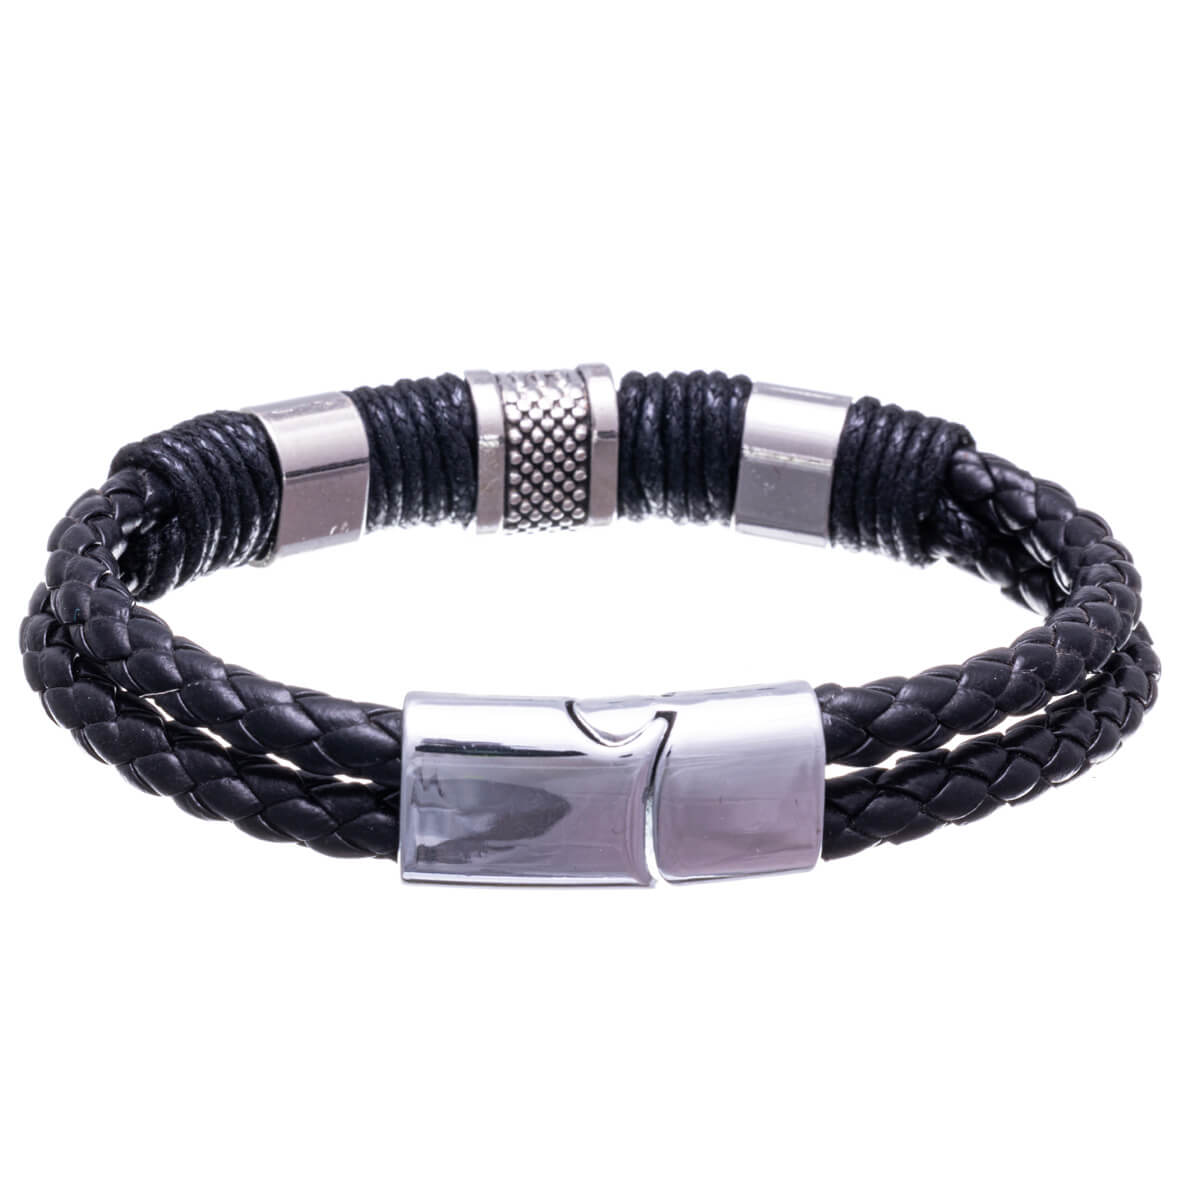 Artificial leather bracelet with metal pieces 21,5cm